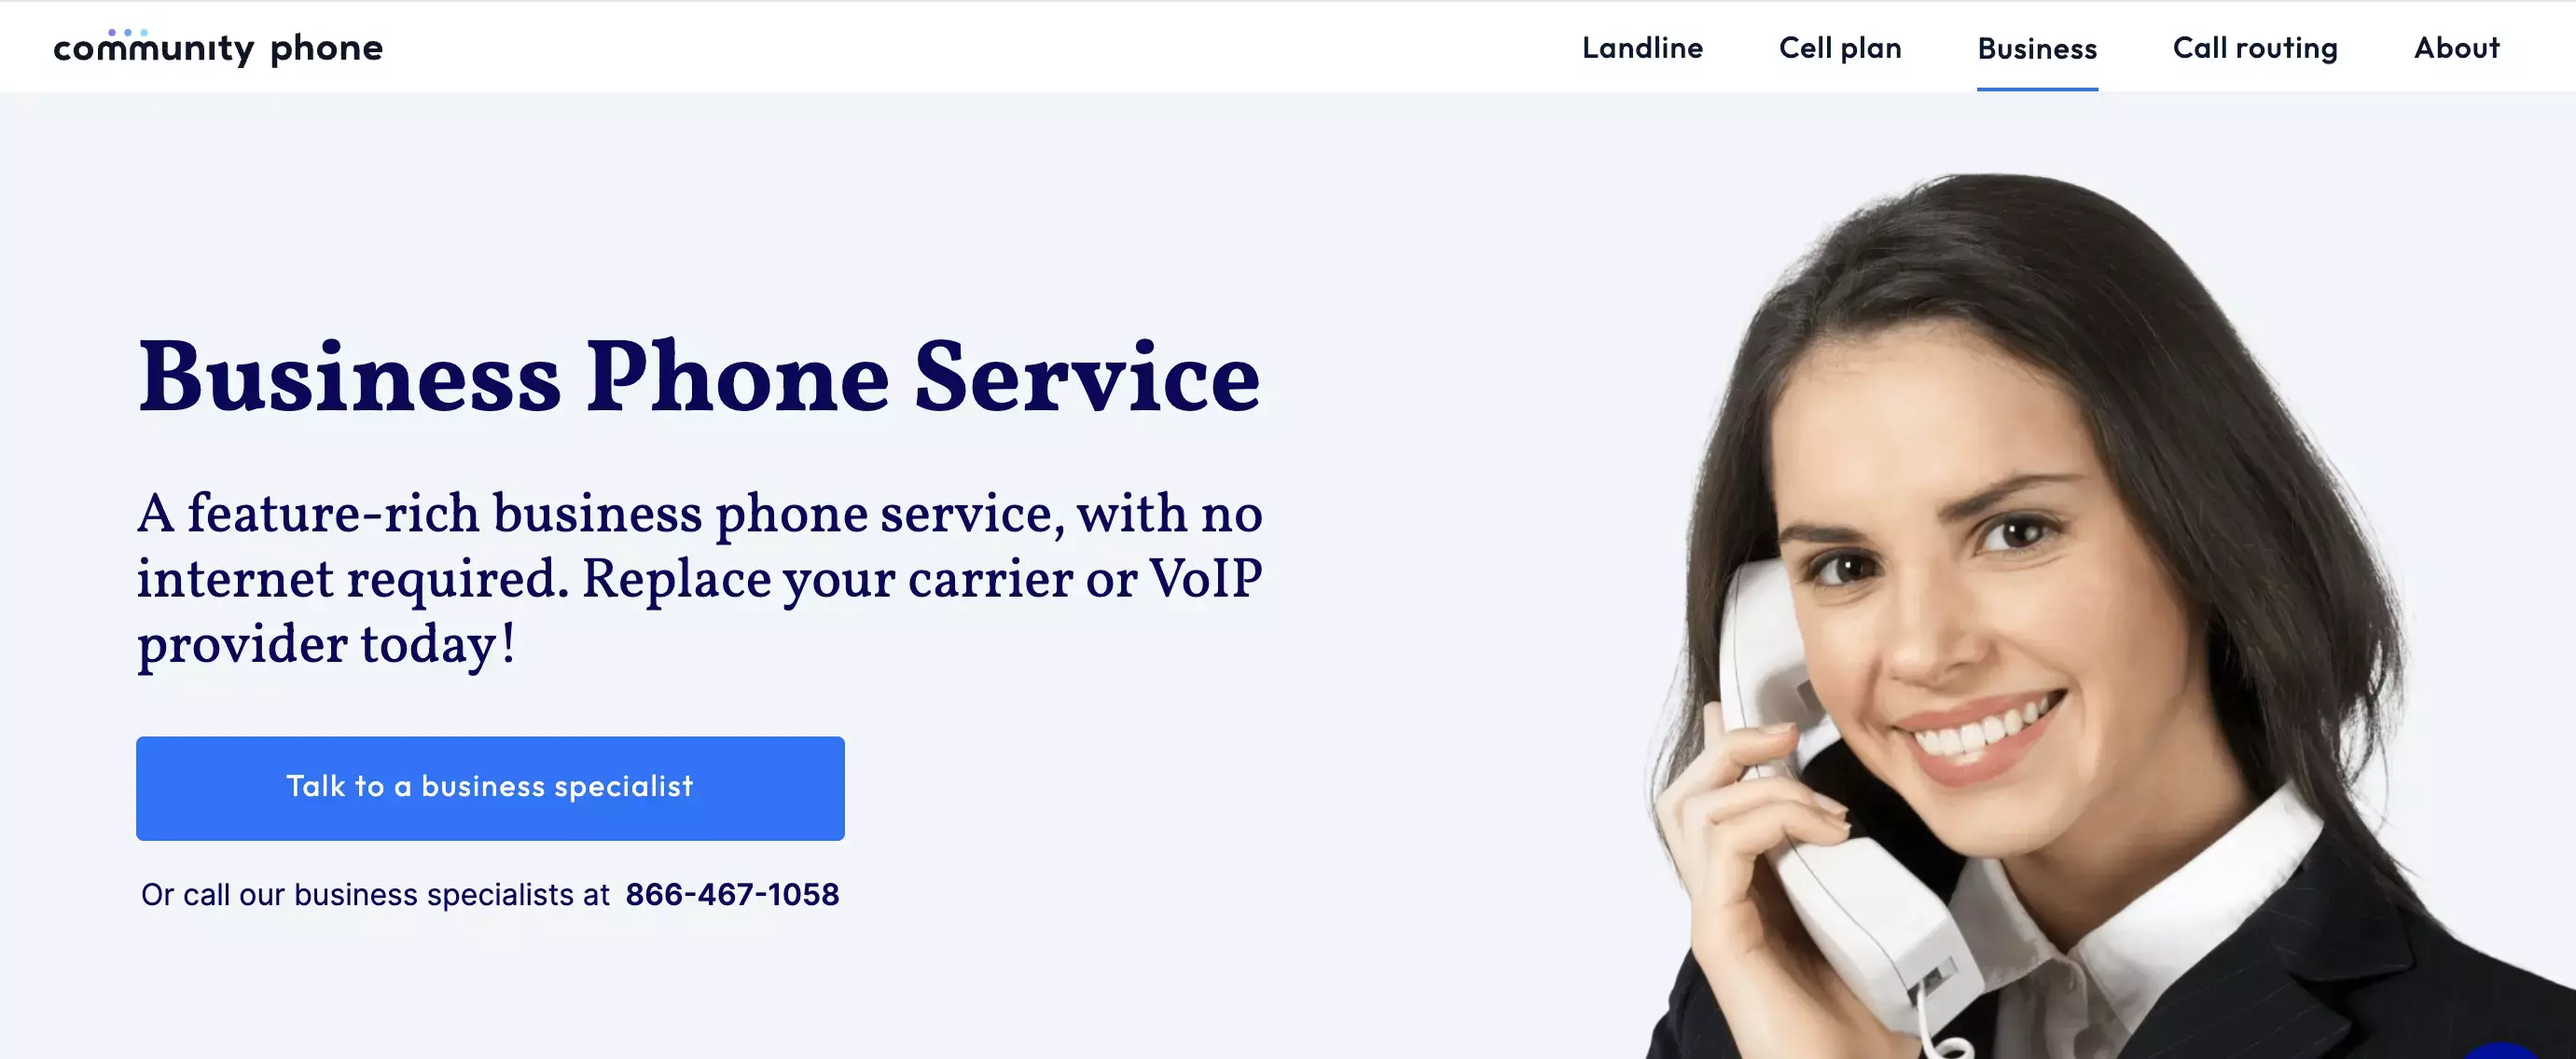 An image of Community Phone Business landline service